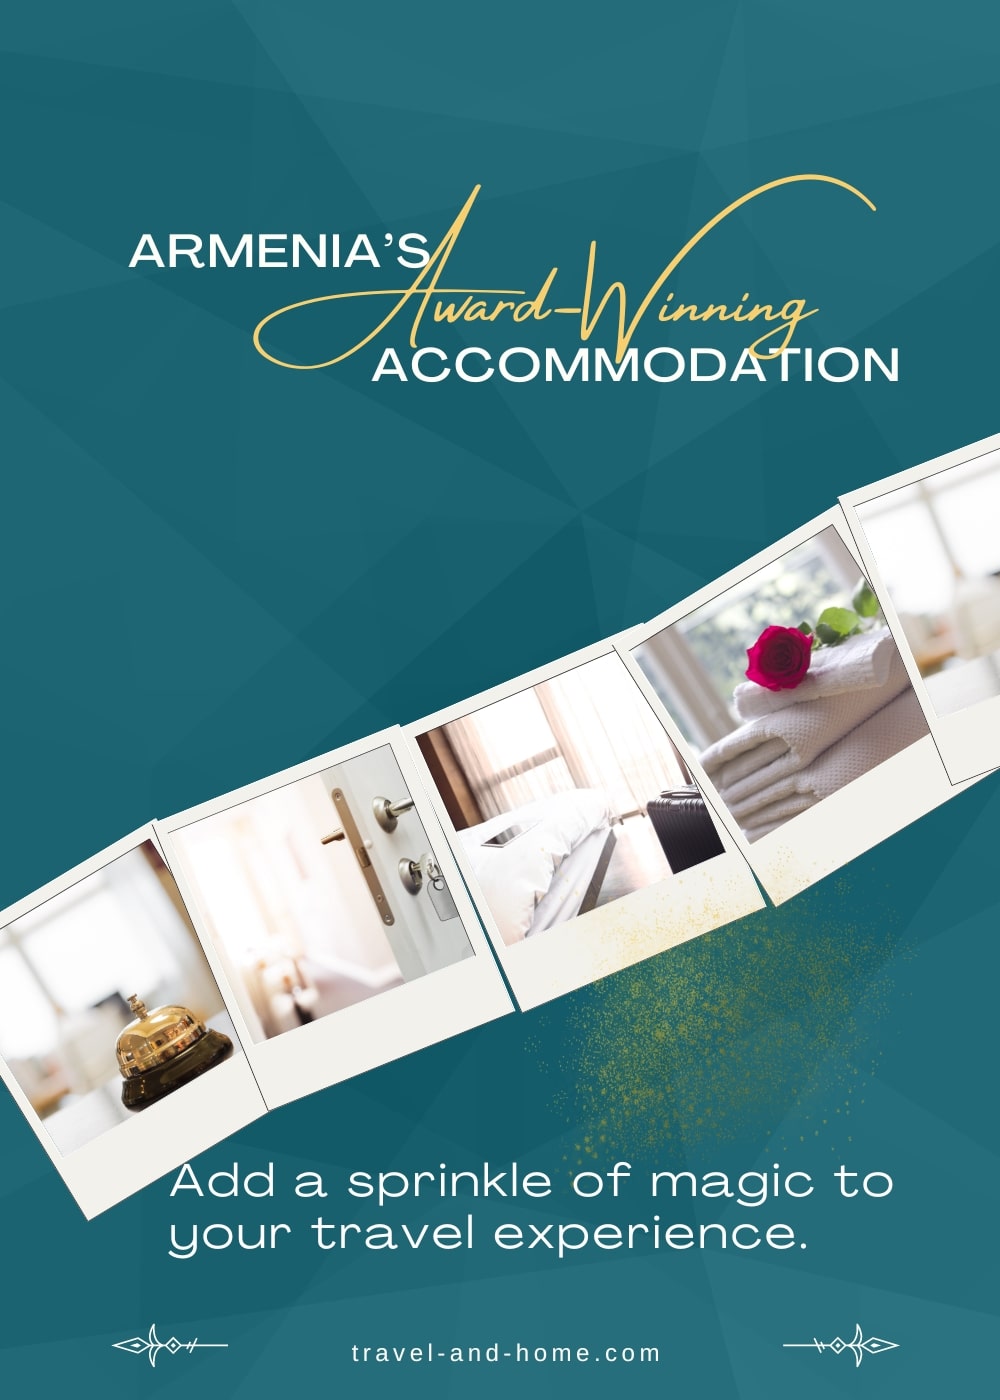 Armenia leading hotels, all inclusive resort, award winning accommodation, travel awards min